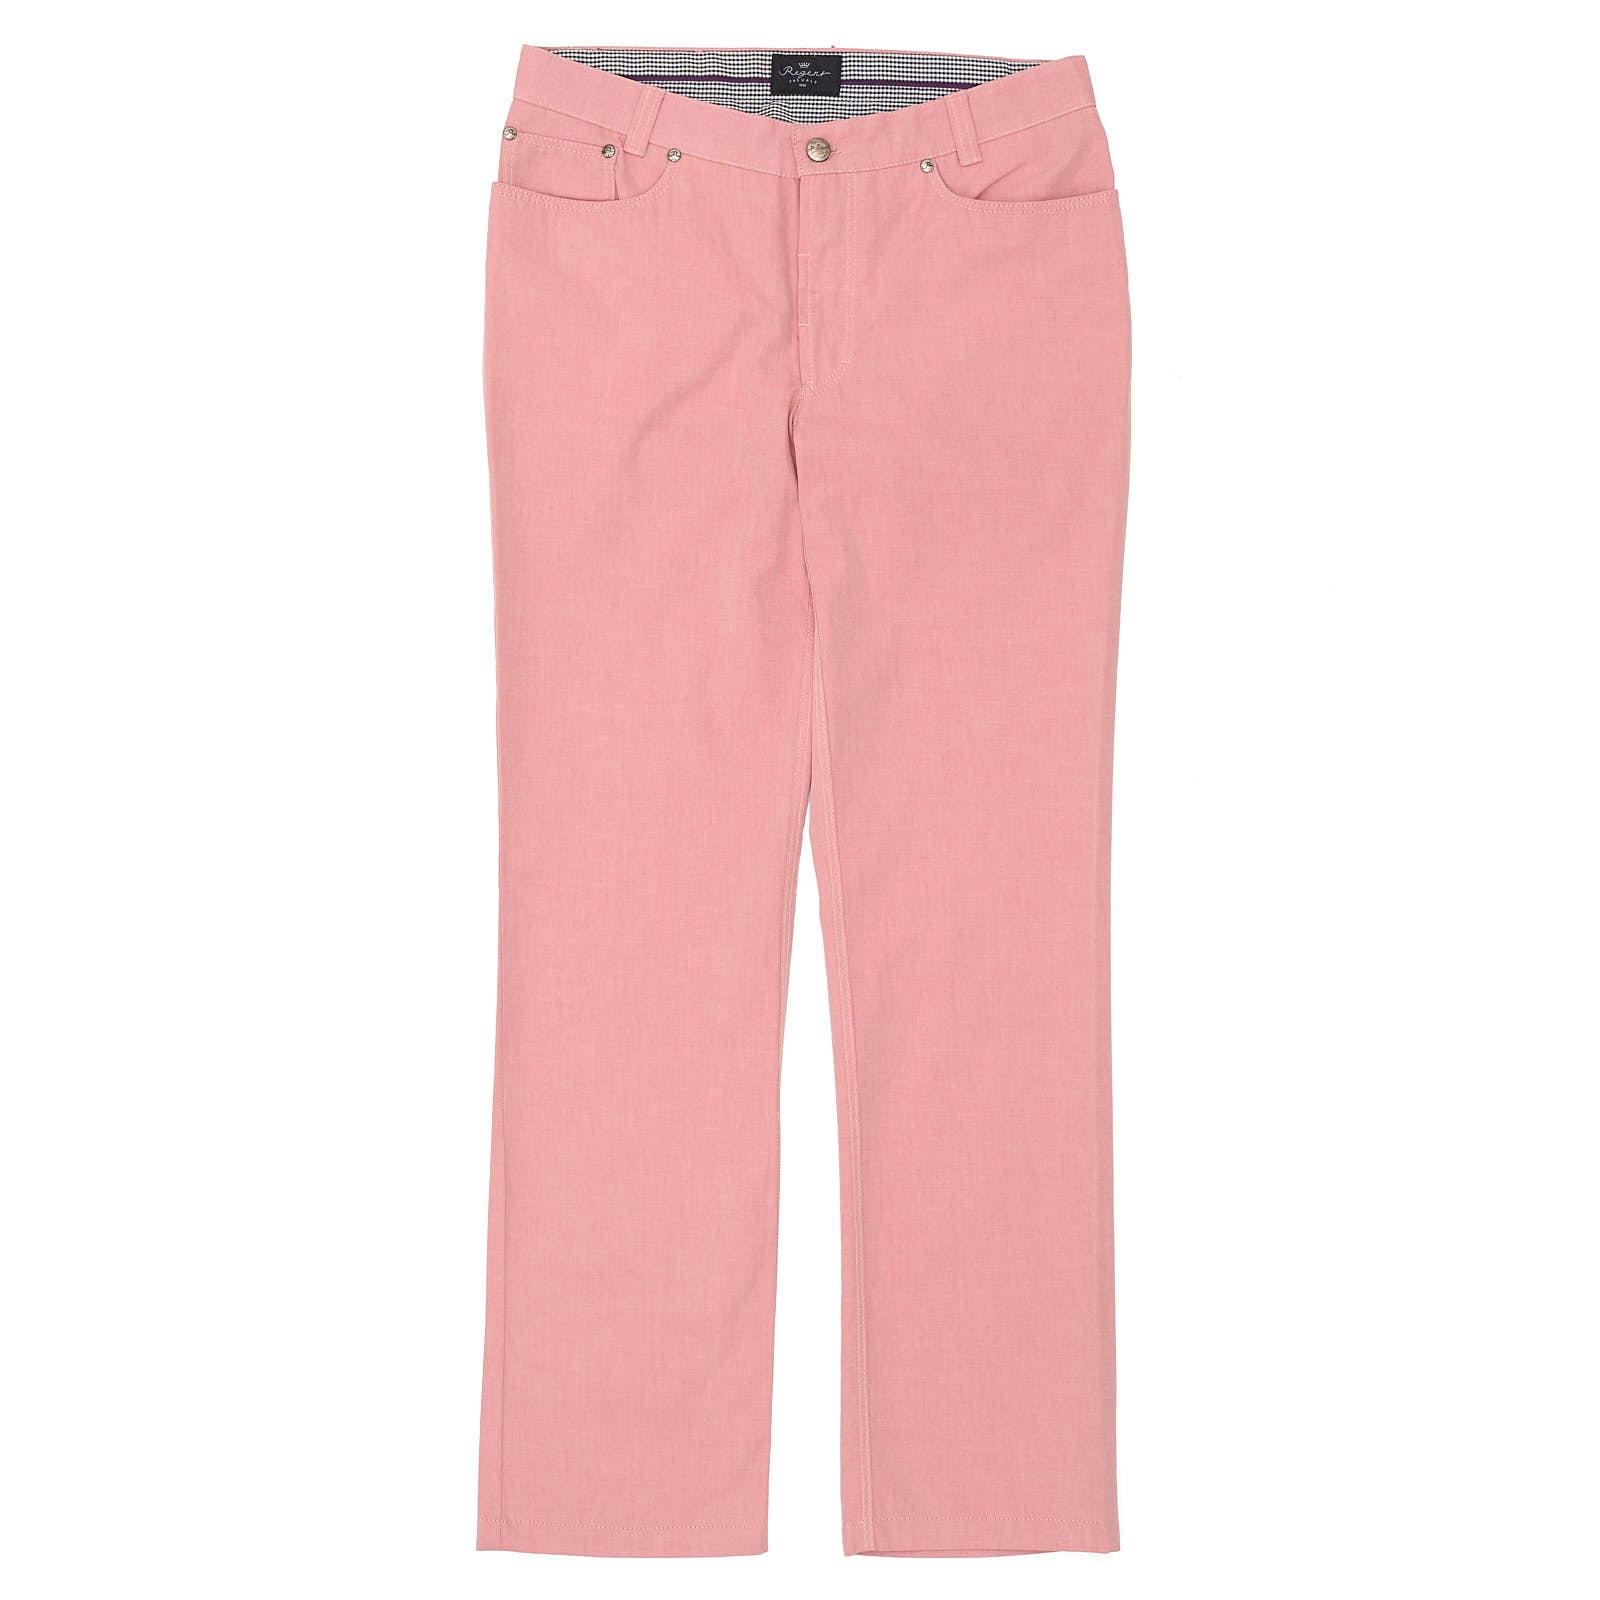 REGENT Germany Pink Denim Stretch Slim Fit Jeans Pants EU 48 NEW US 32